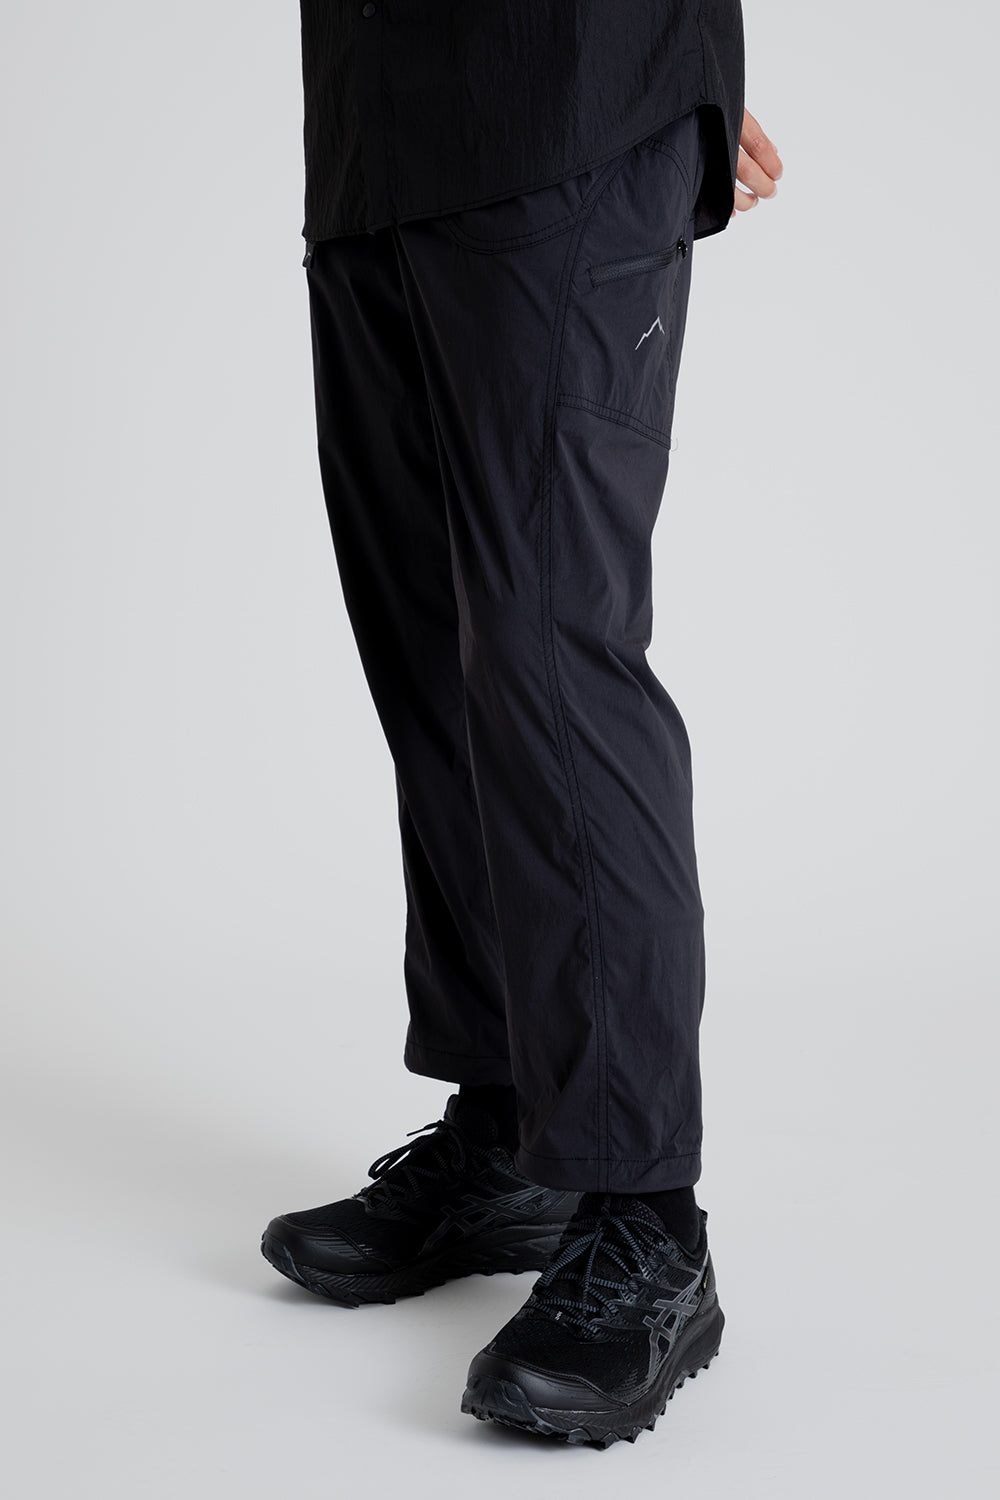 adidas TERREX Made to Be Remade Hiking Pants - Black | Men's Hiking |  adidas US